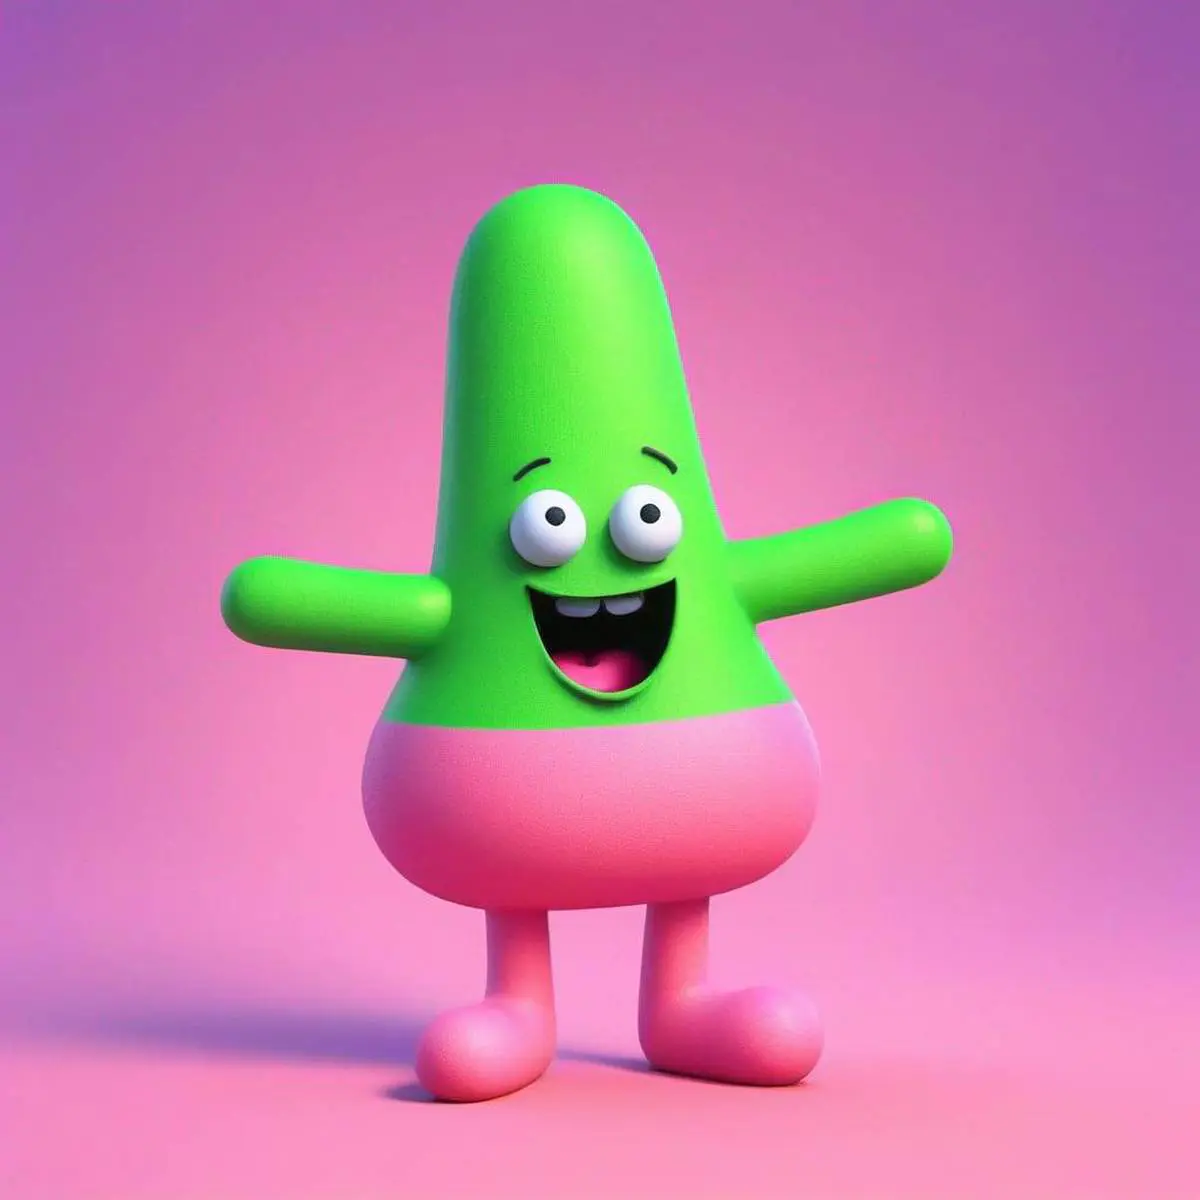 Patrick puns